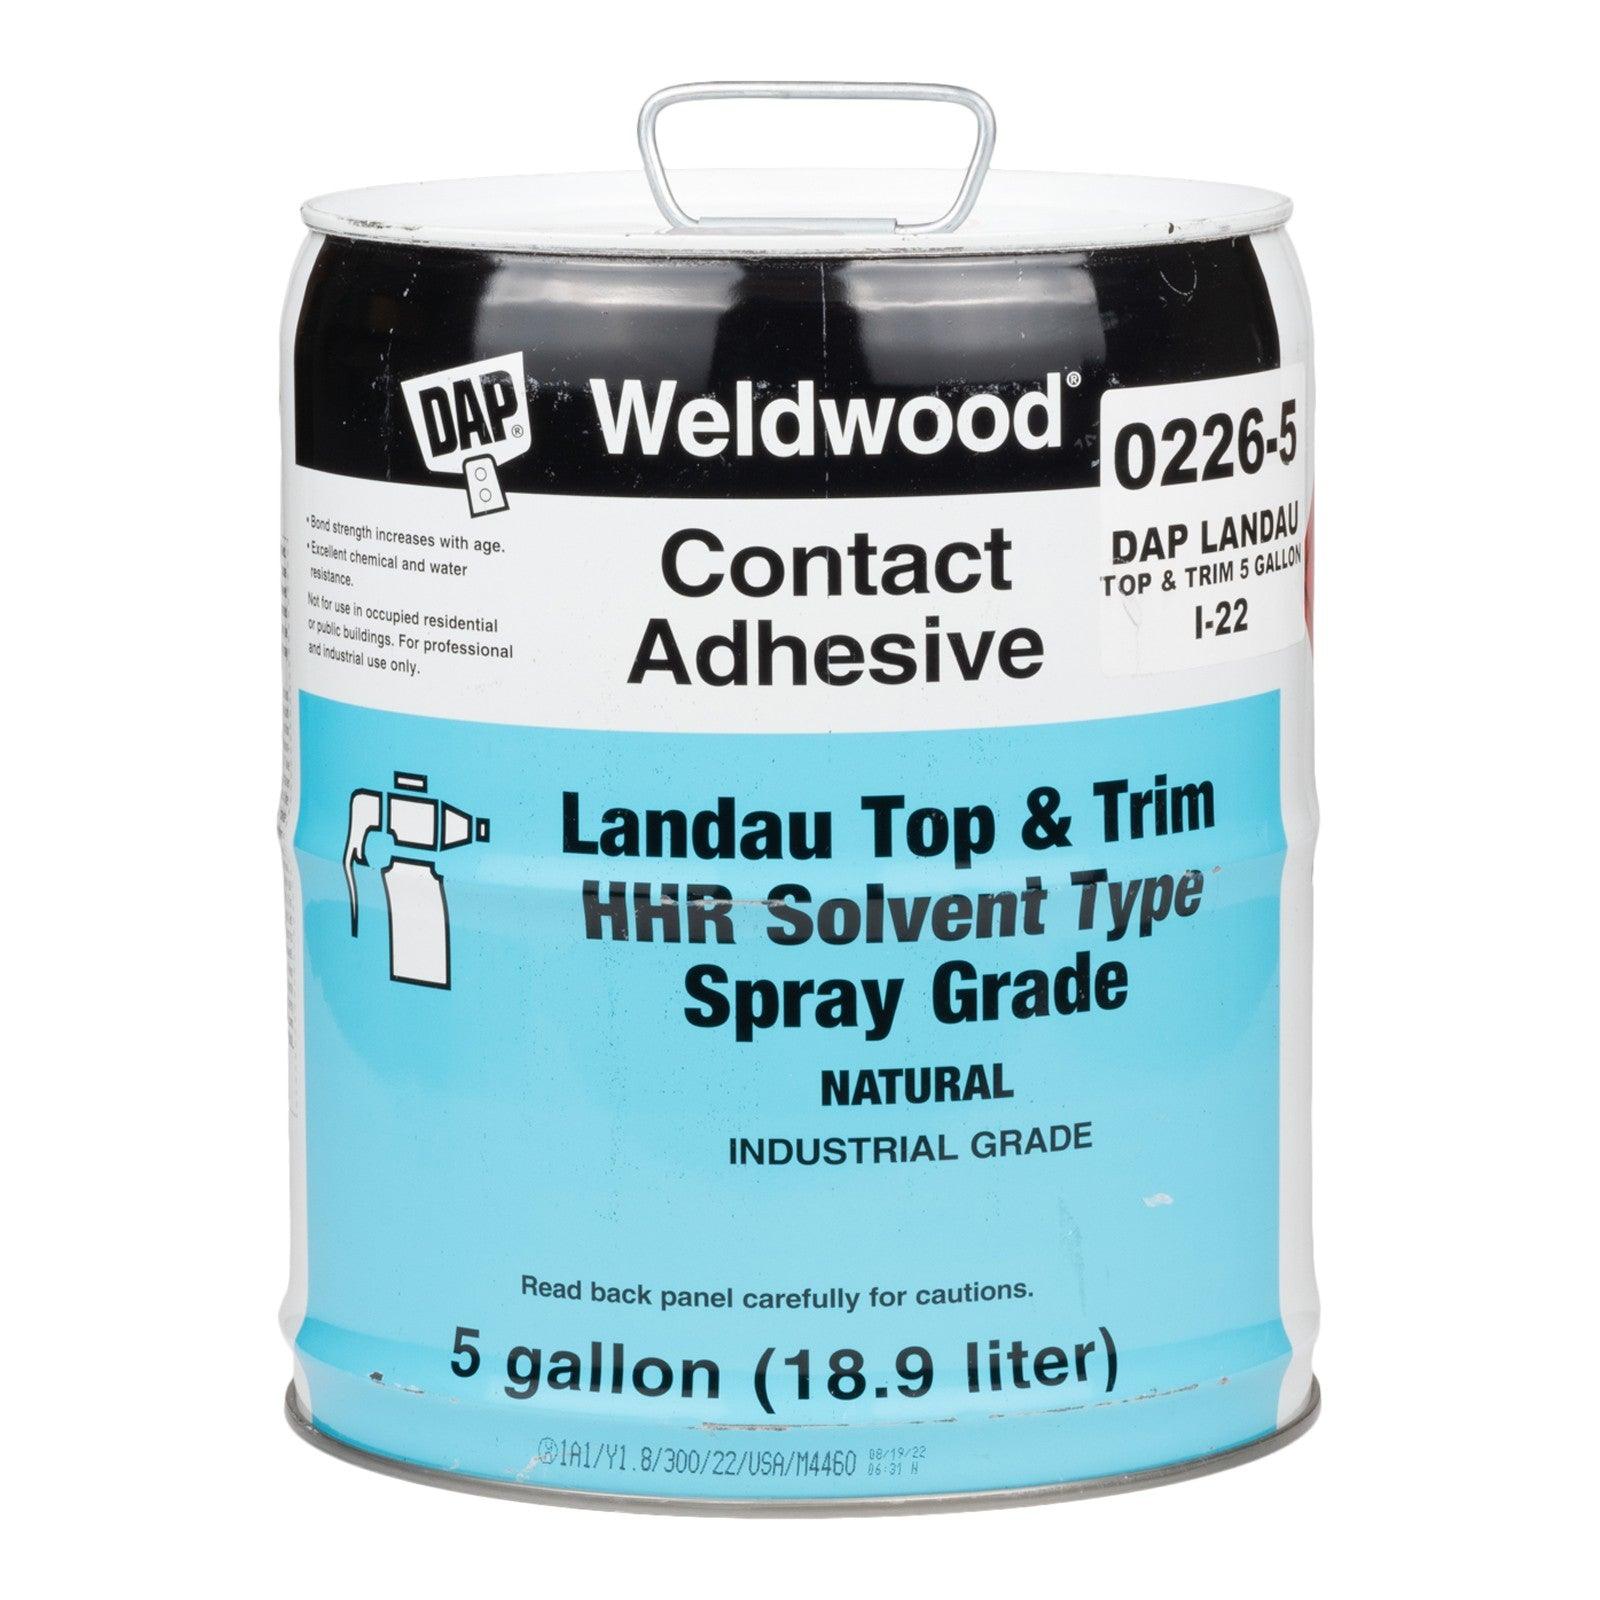 DAP Weldwood Contact Adhesive Top & Trim HHR Solvent Type Spray Grade 1  GALLON